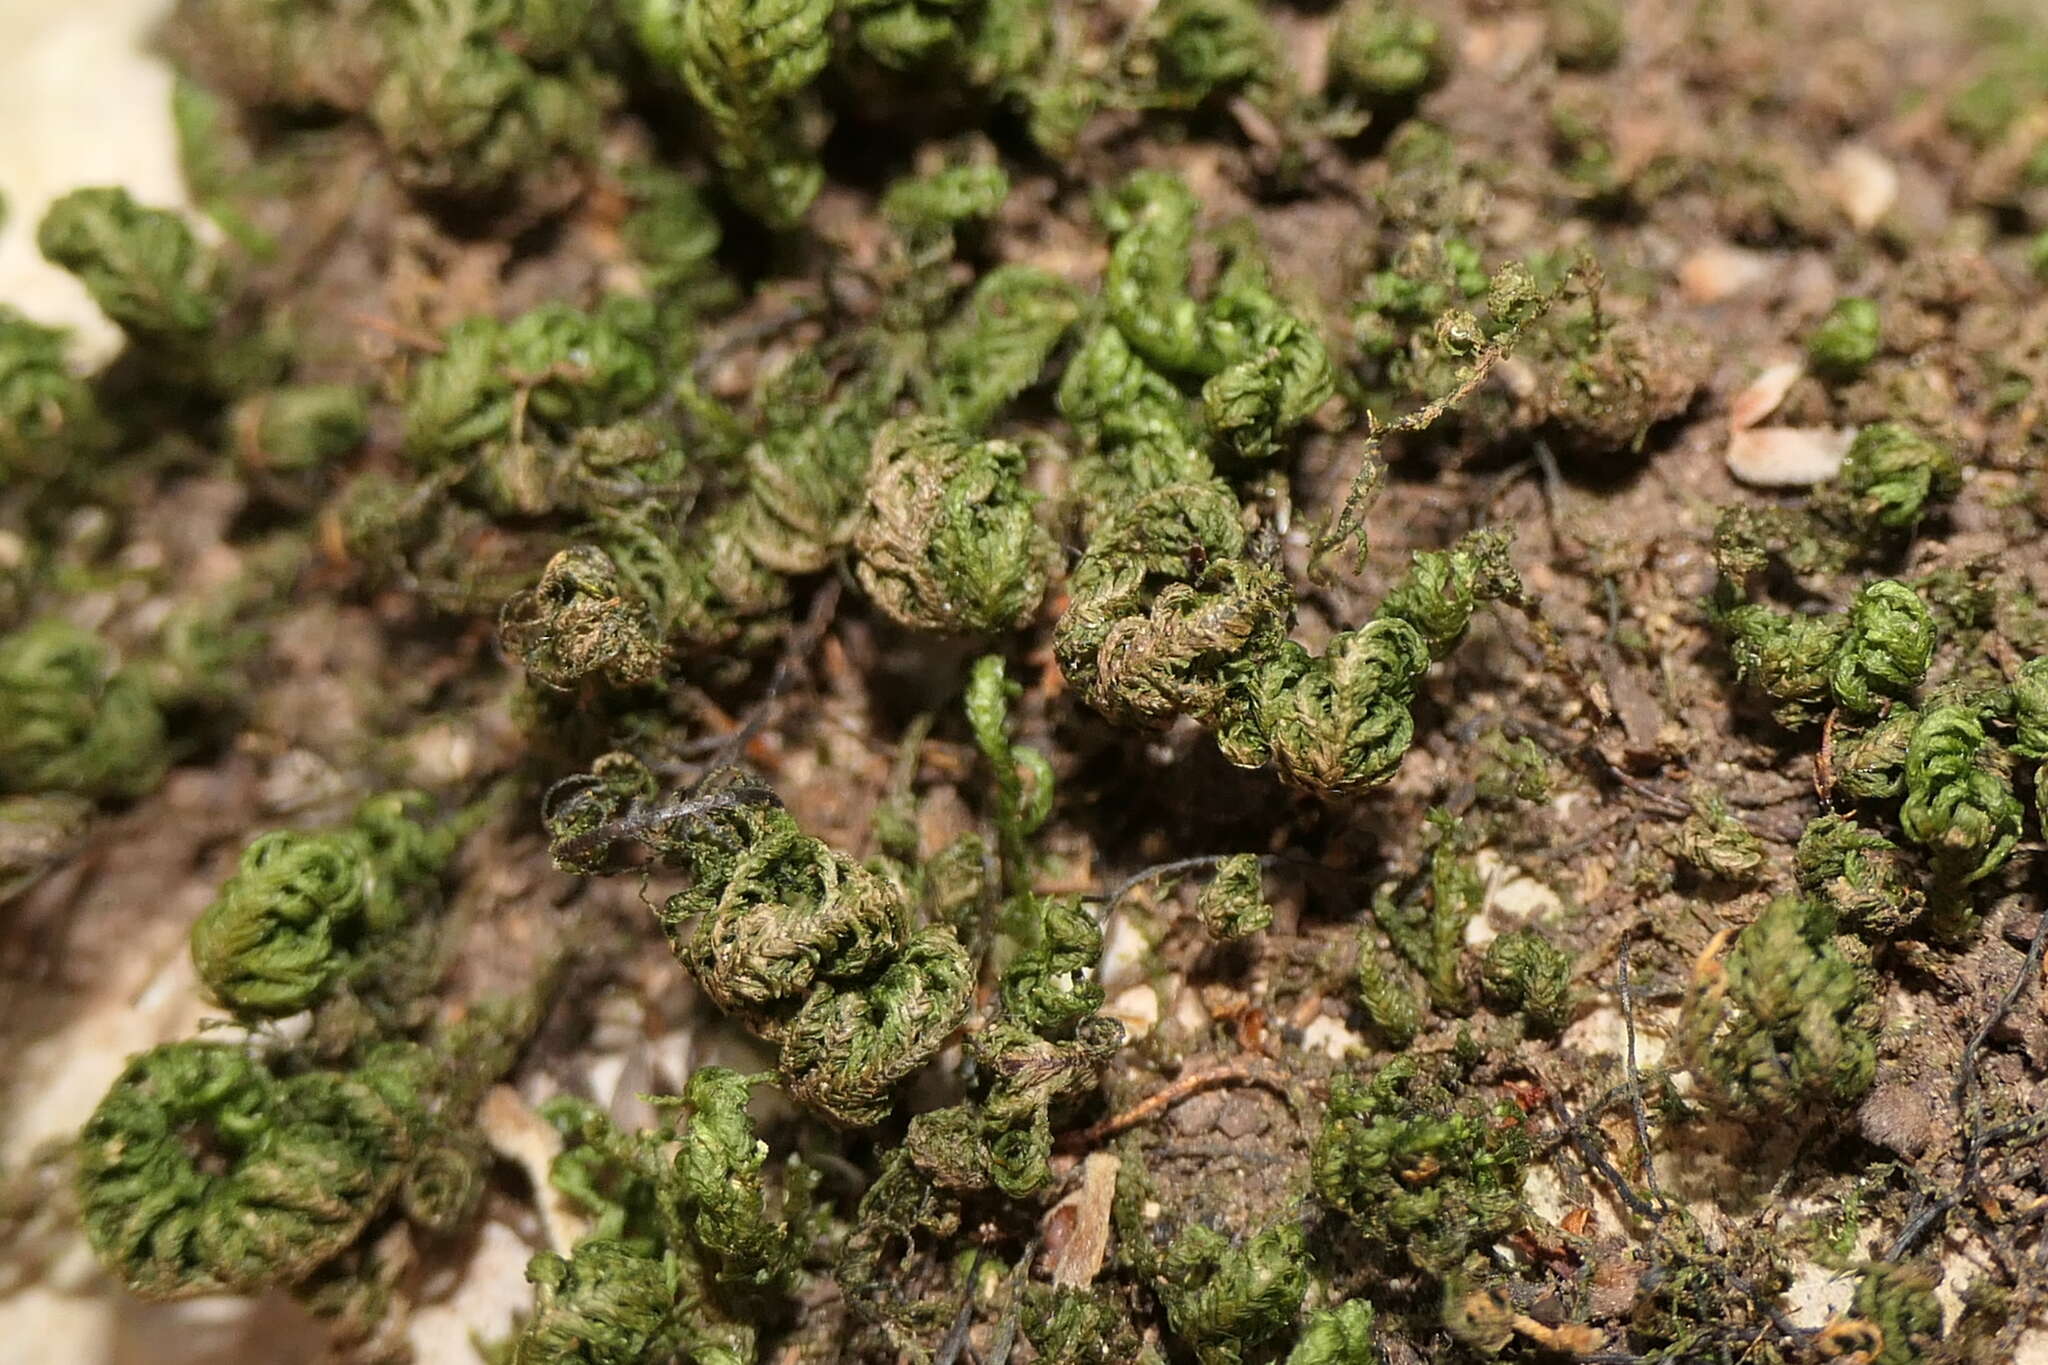 Image of Smith's leptodon moss